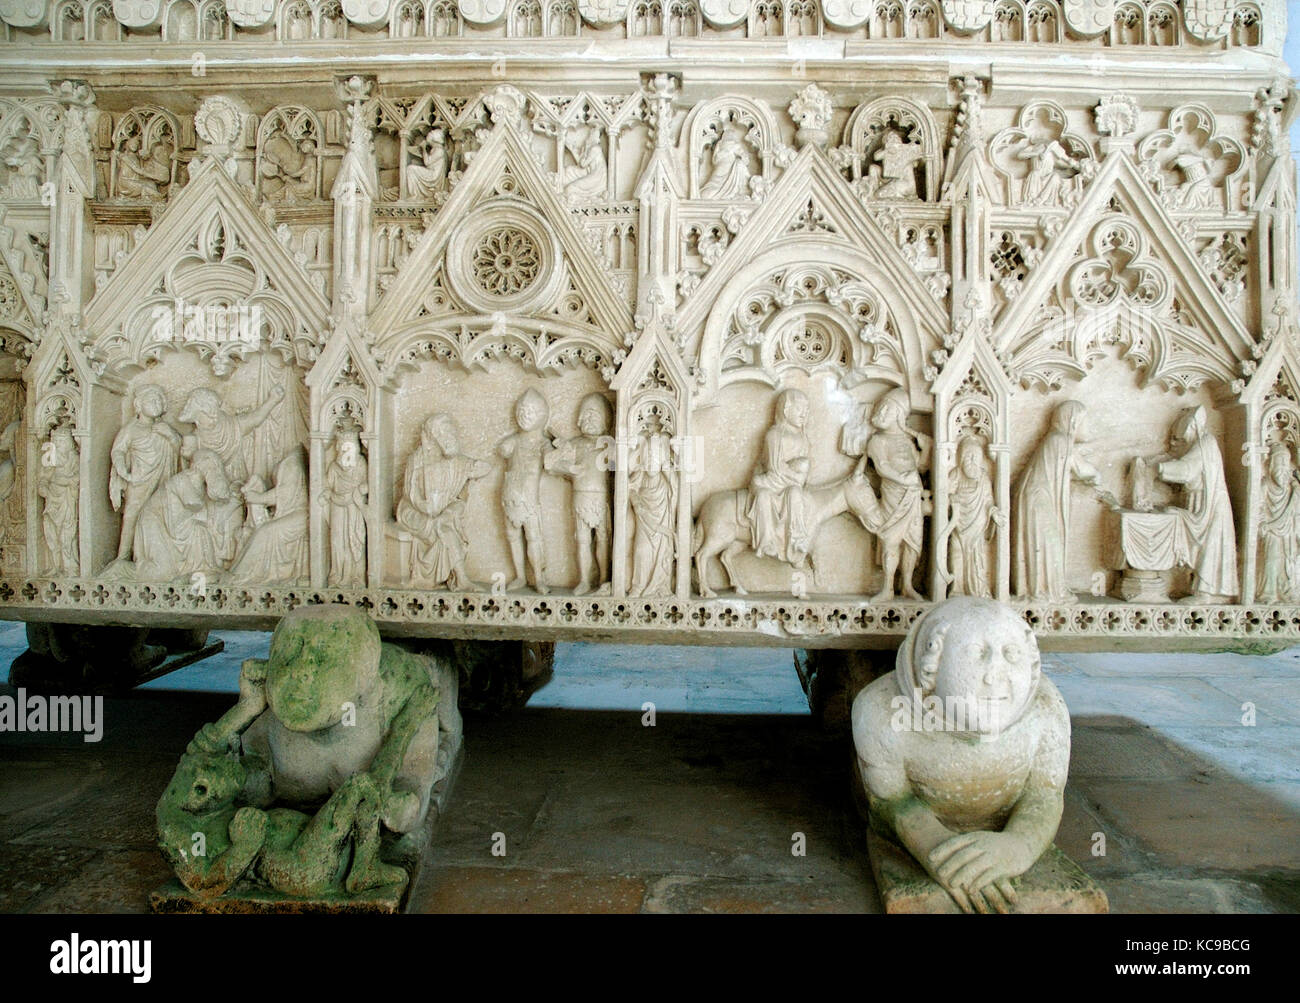 Dona Inês de Castro tomb, dating back to the XIV century. Alcobaça Monastery, a UNESCO World Heritage Site. Alcobaça, Portugal Stock Photo